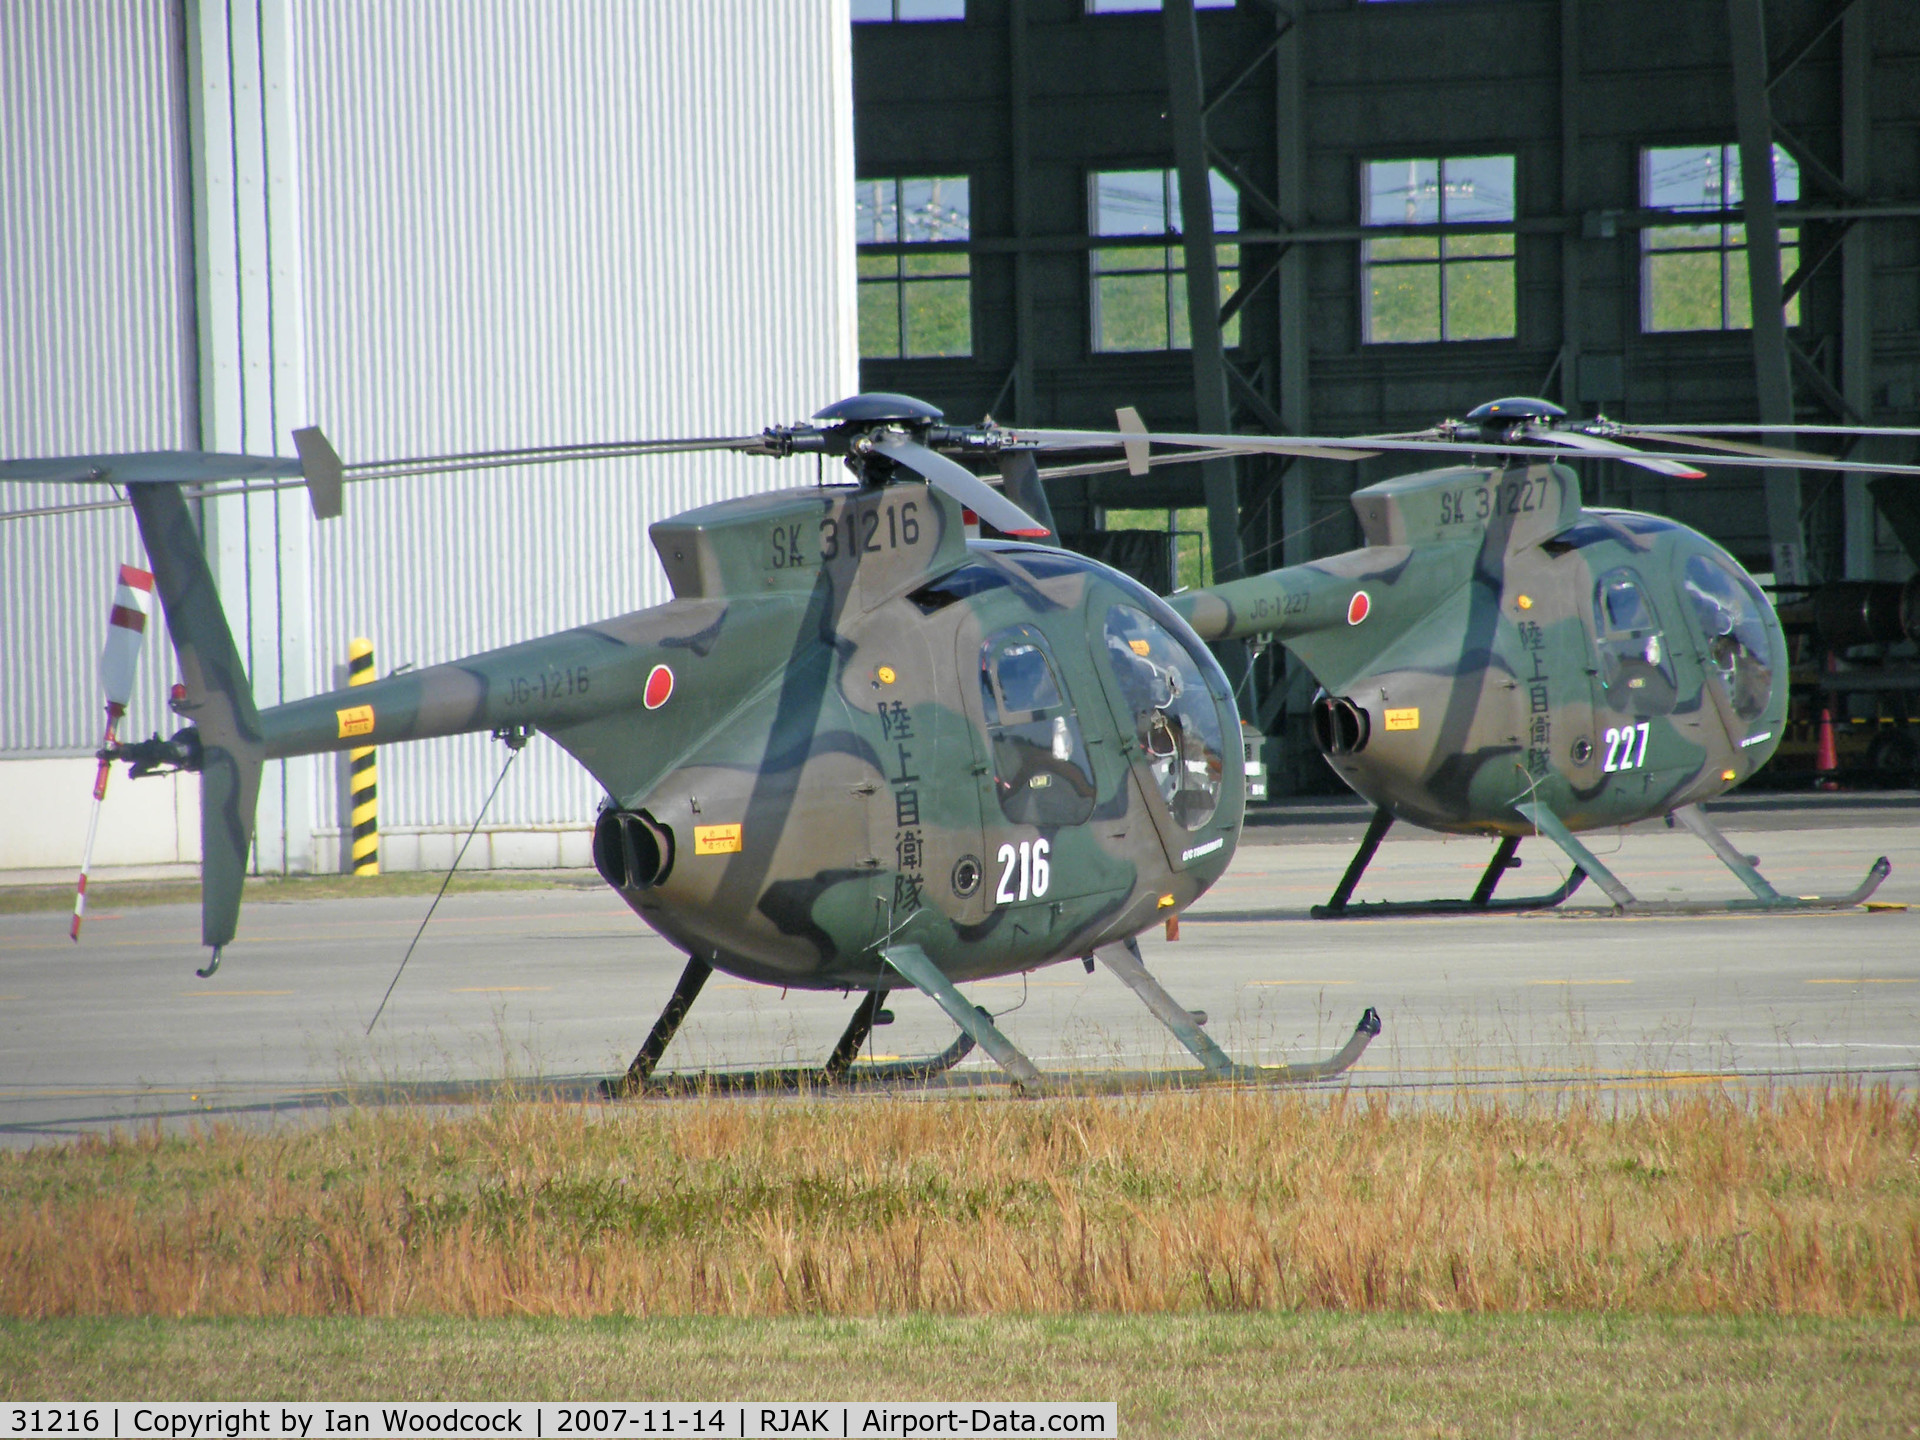 31216, Hughes (Kawasaki) OH-6D (369D) C/N 6524, OH-6D/Kasumigaura (Alongside 31227)